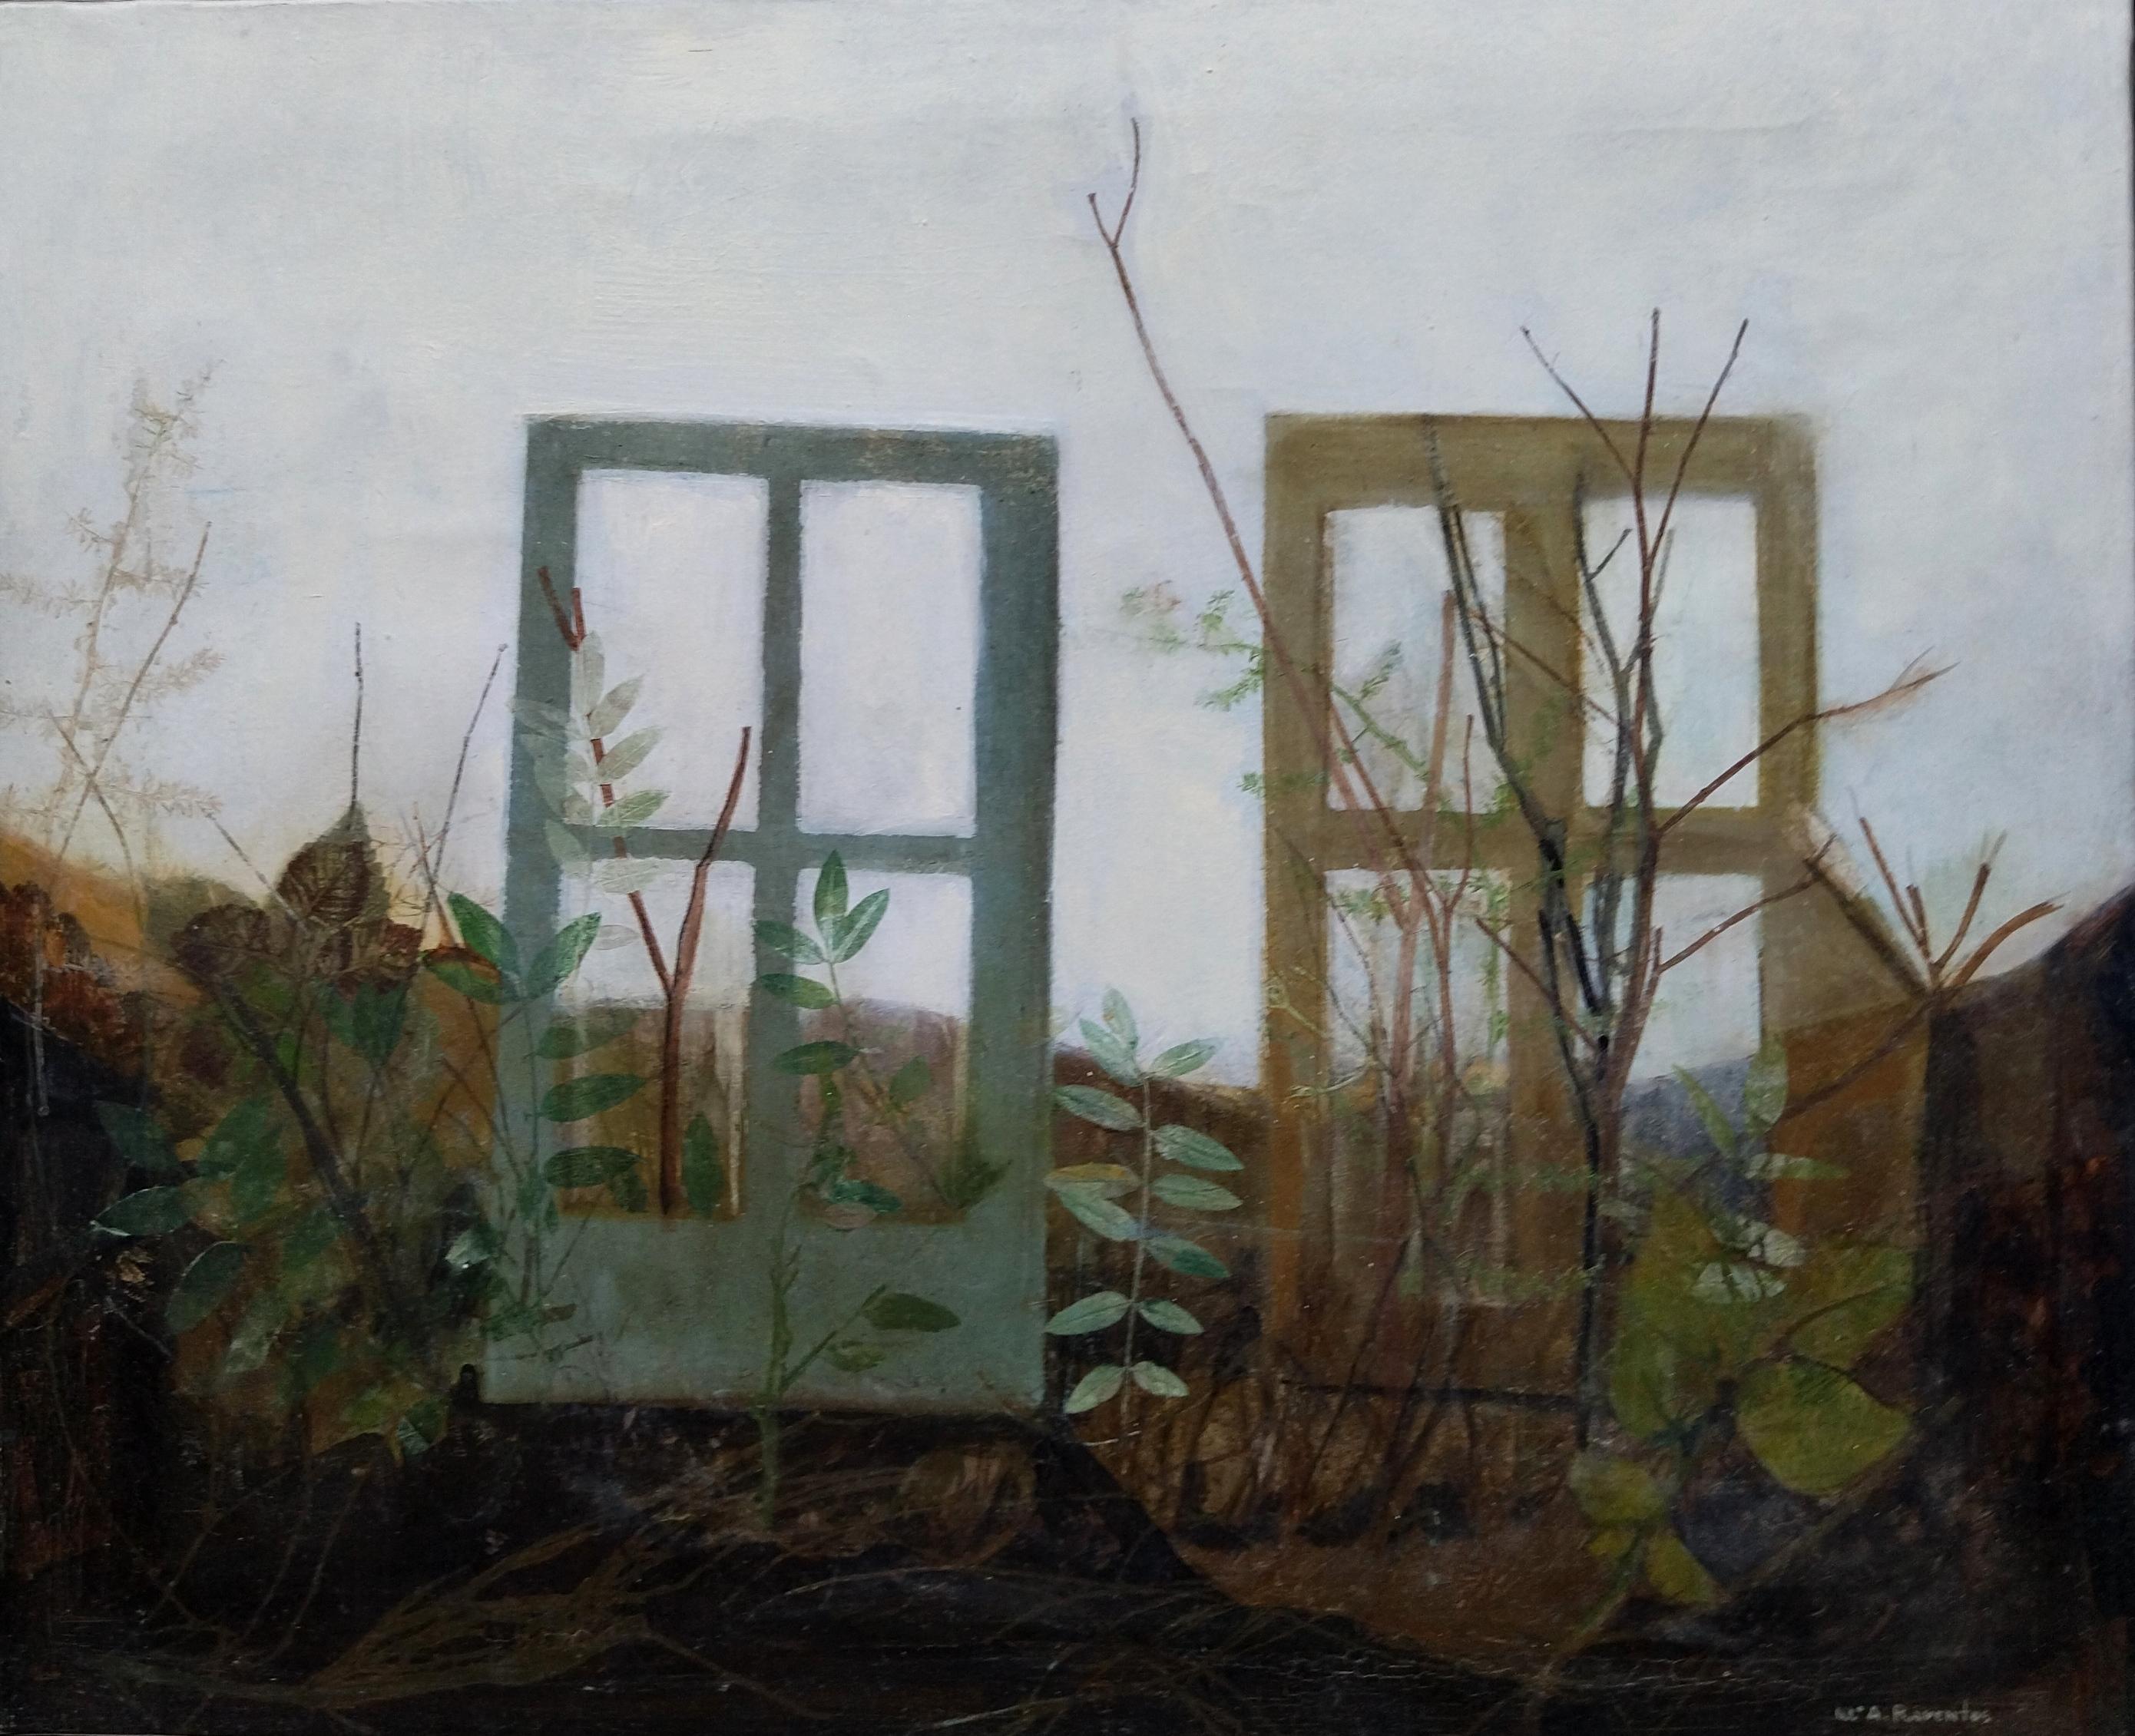 RAVENTOS  Winds Windows   Garden  Green original abstract mixed media - Expressionist Painting by Maria Asuncion Raventos